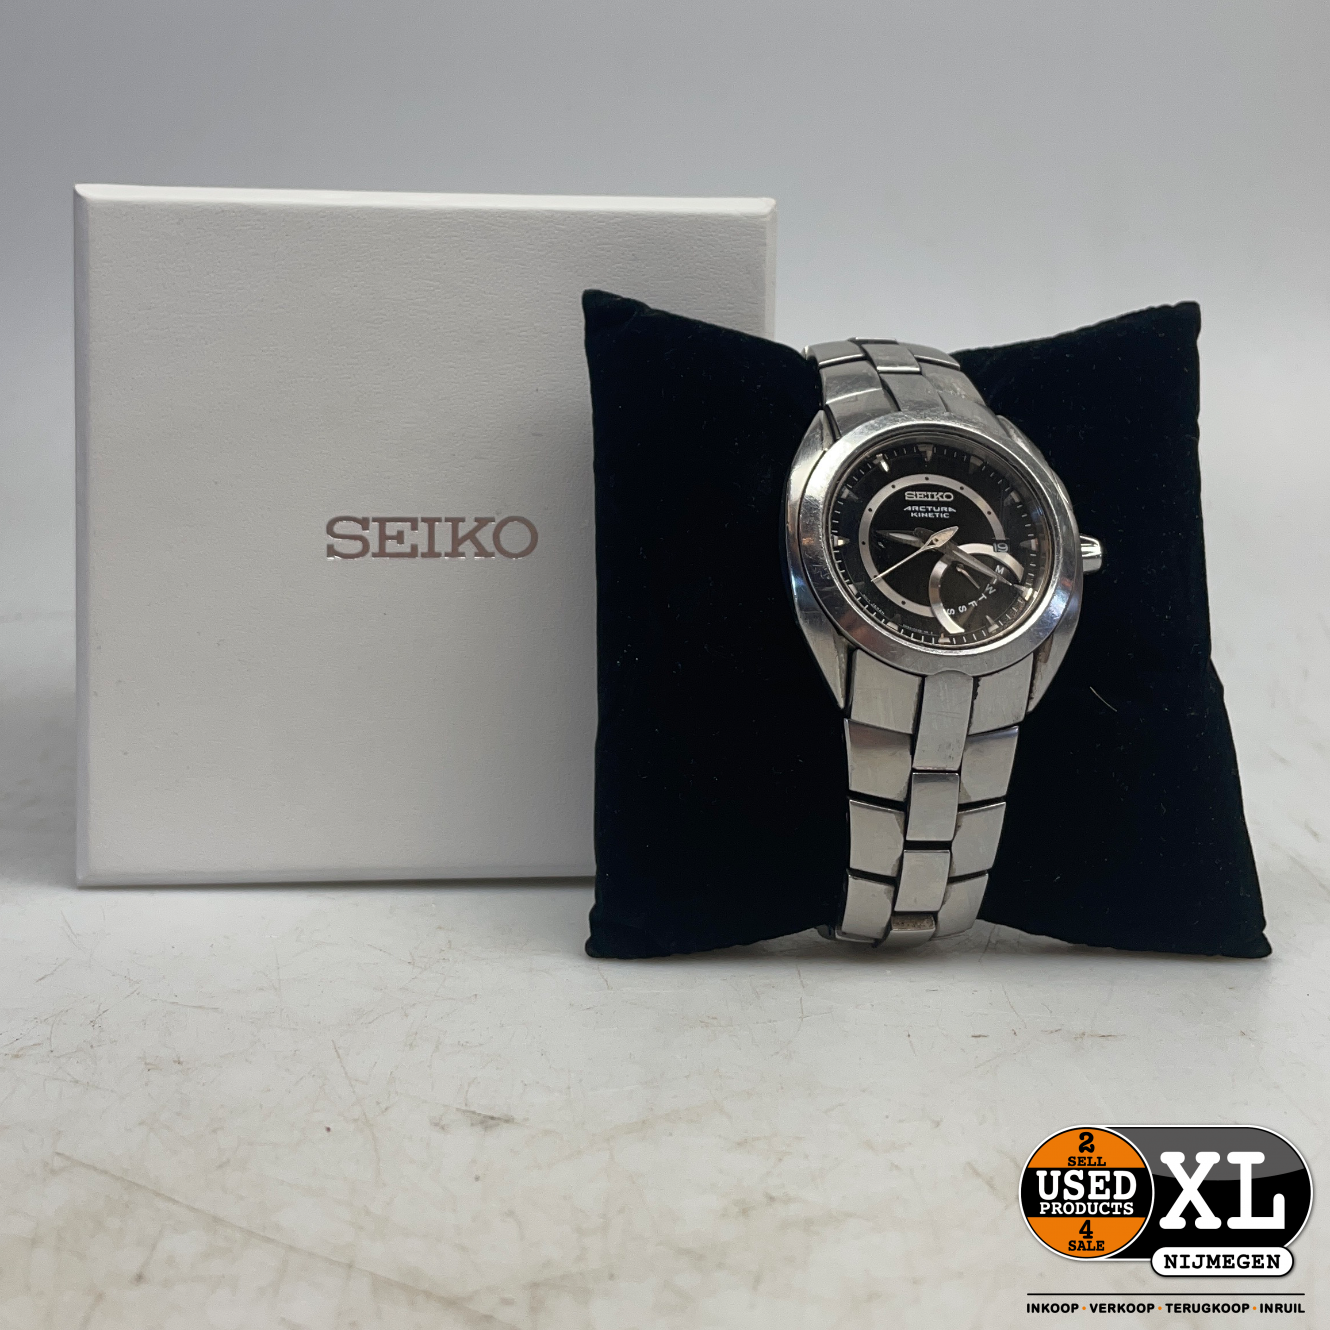 Seiko Arctura 5M54-0AB0 Horloge | Garantie - Used Products Nijmegen XL